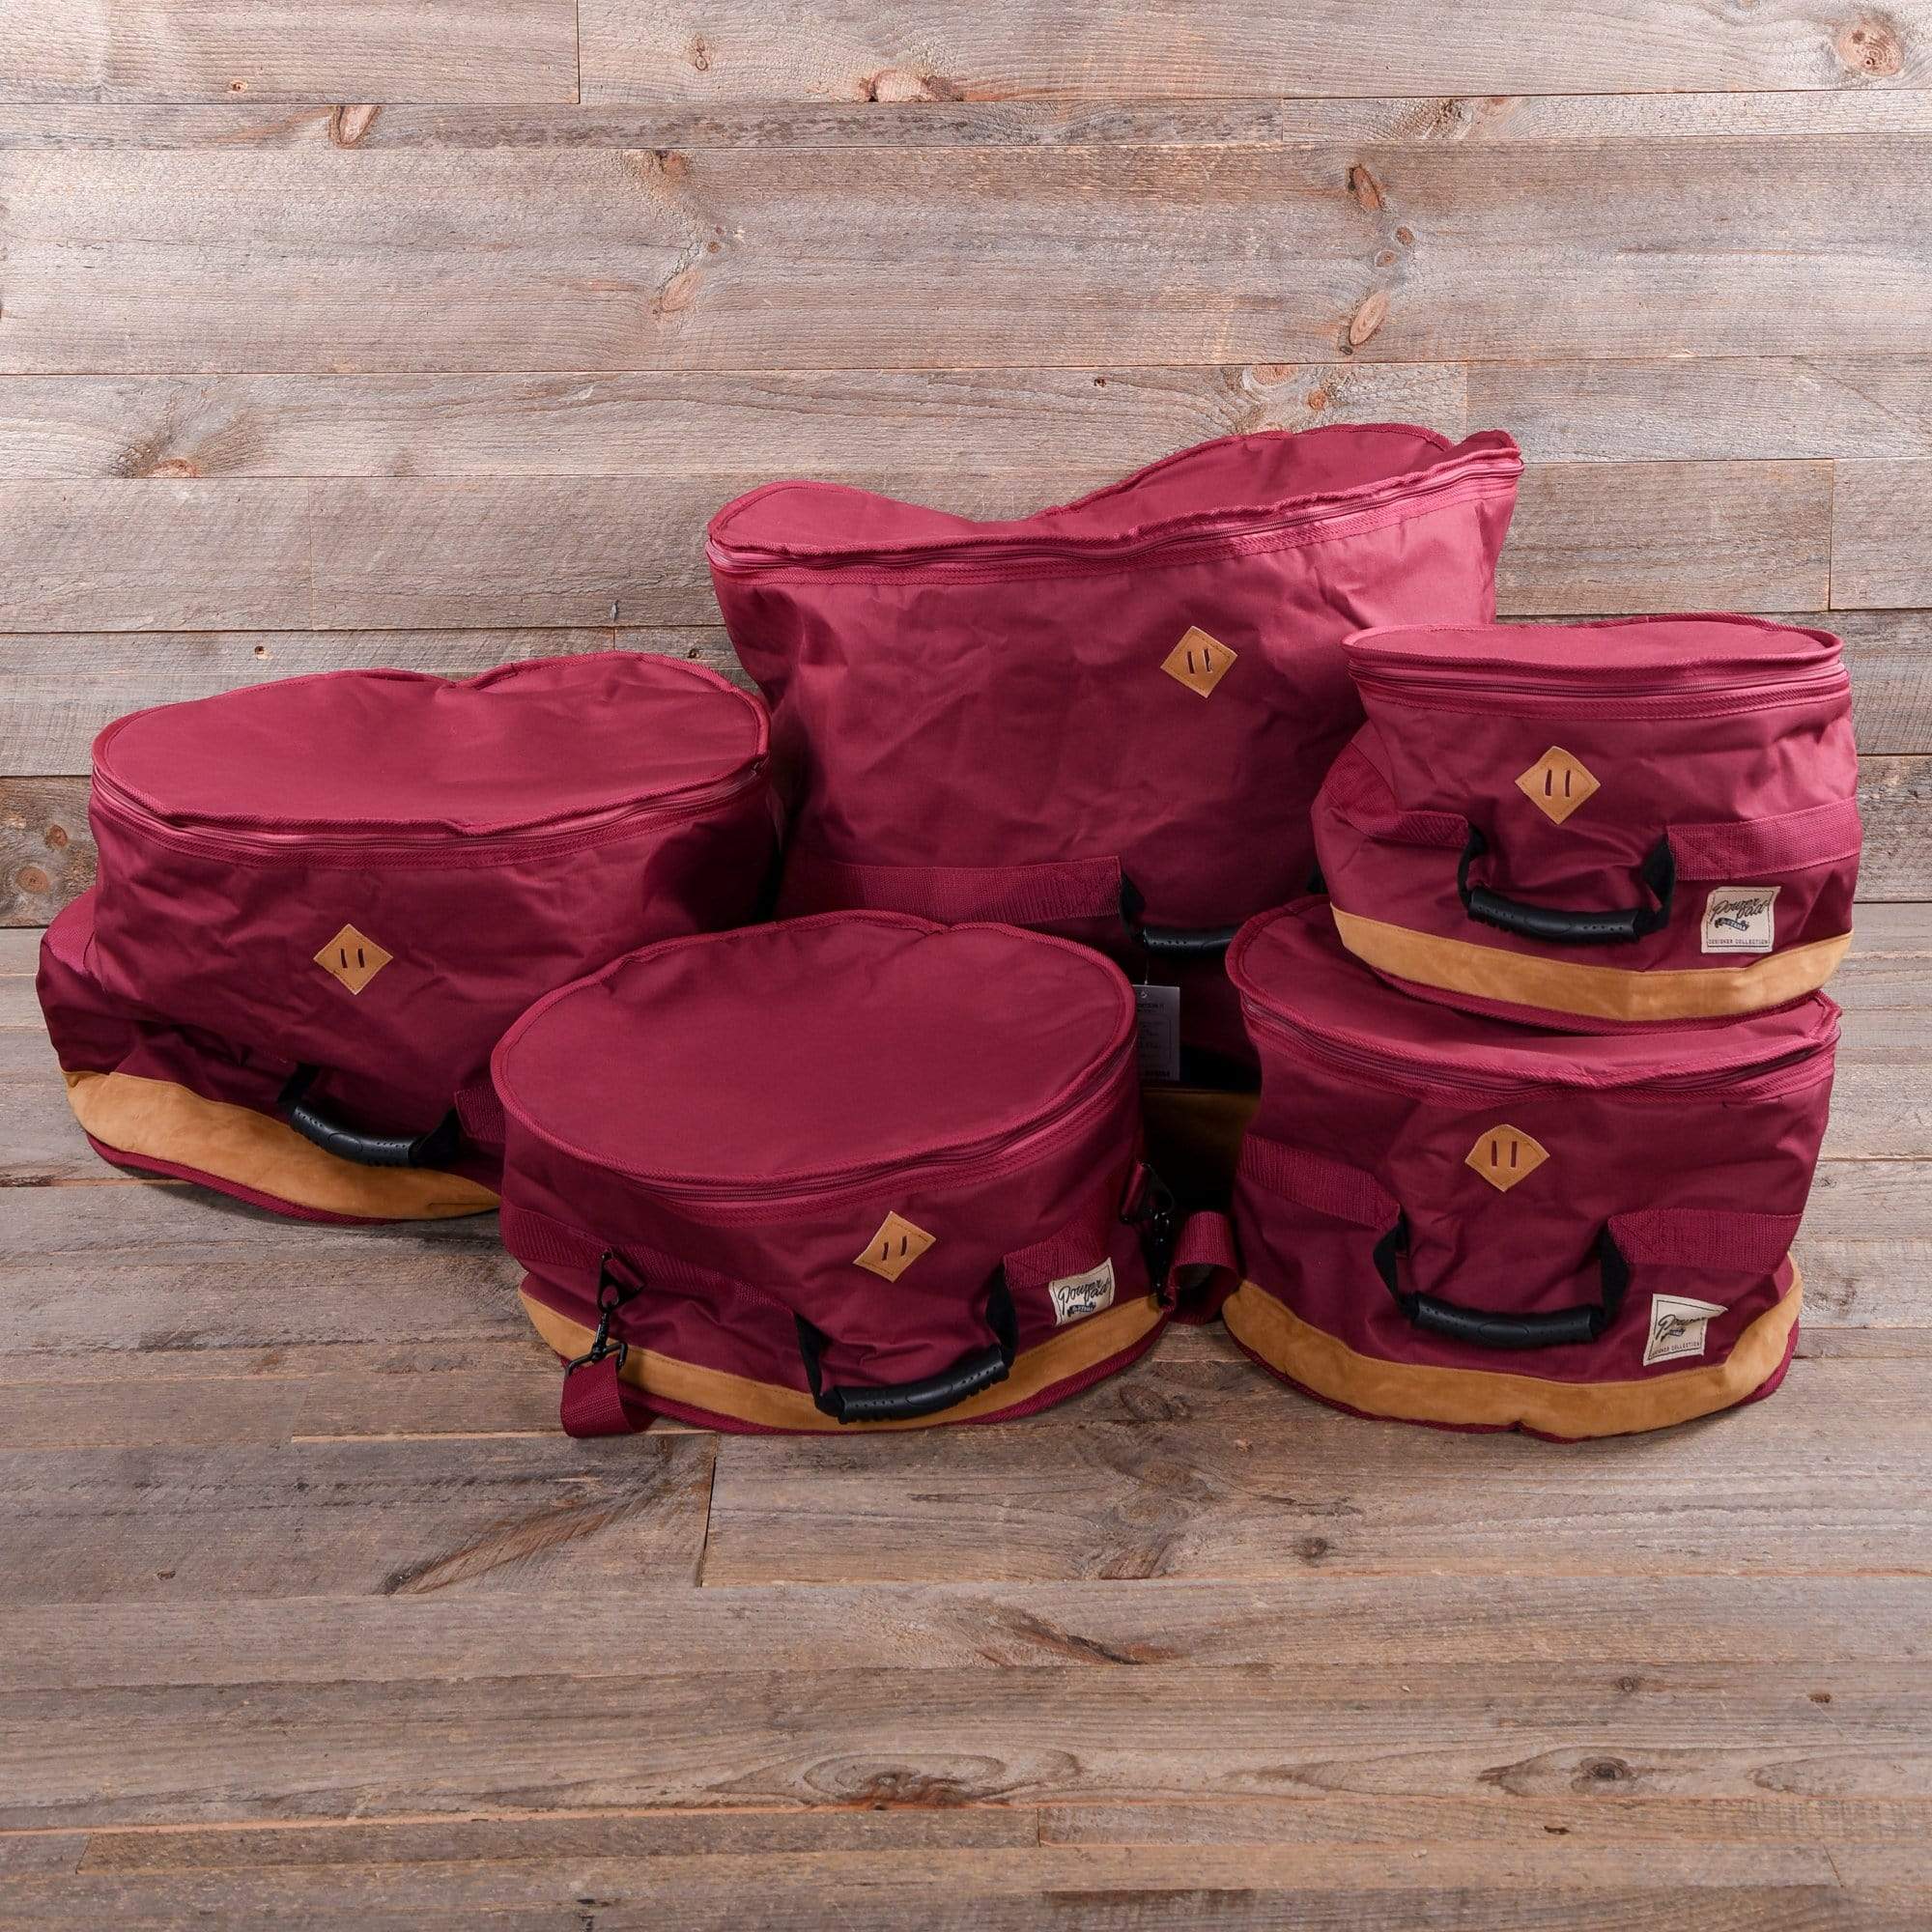 Nayabingi Drum' Duffle Bag : Jokajok